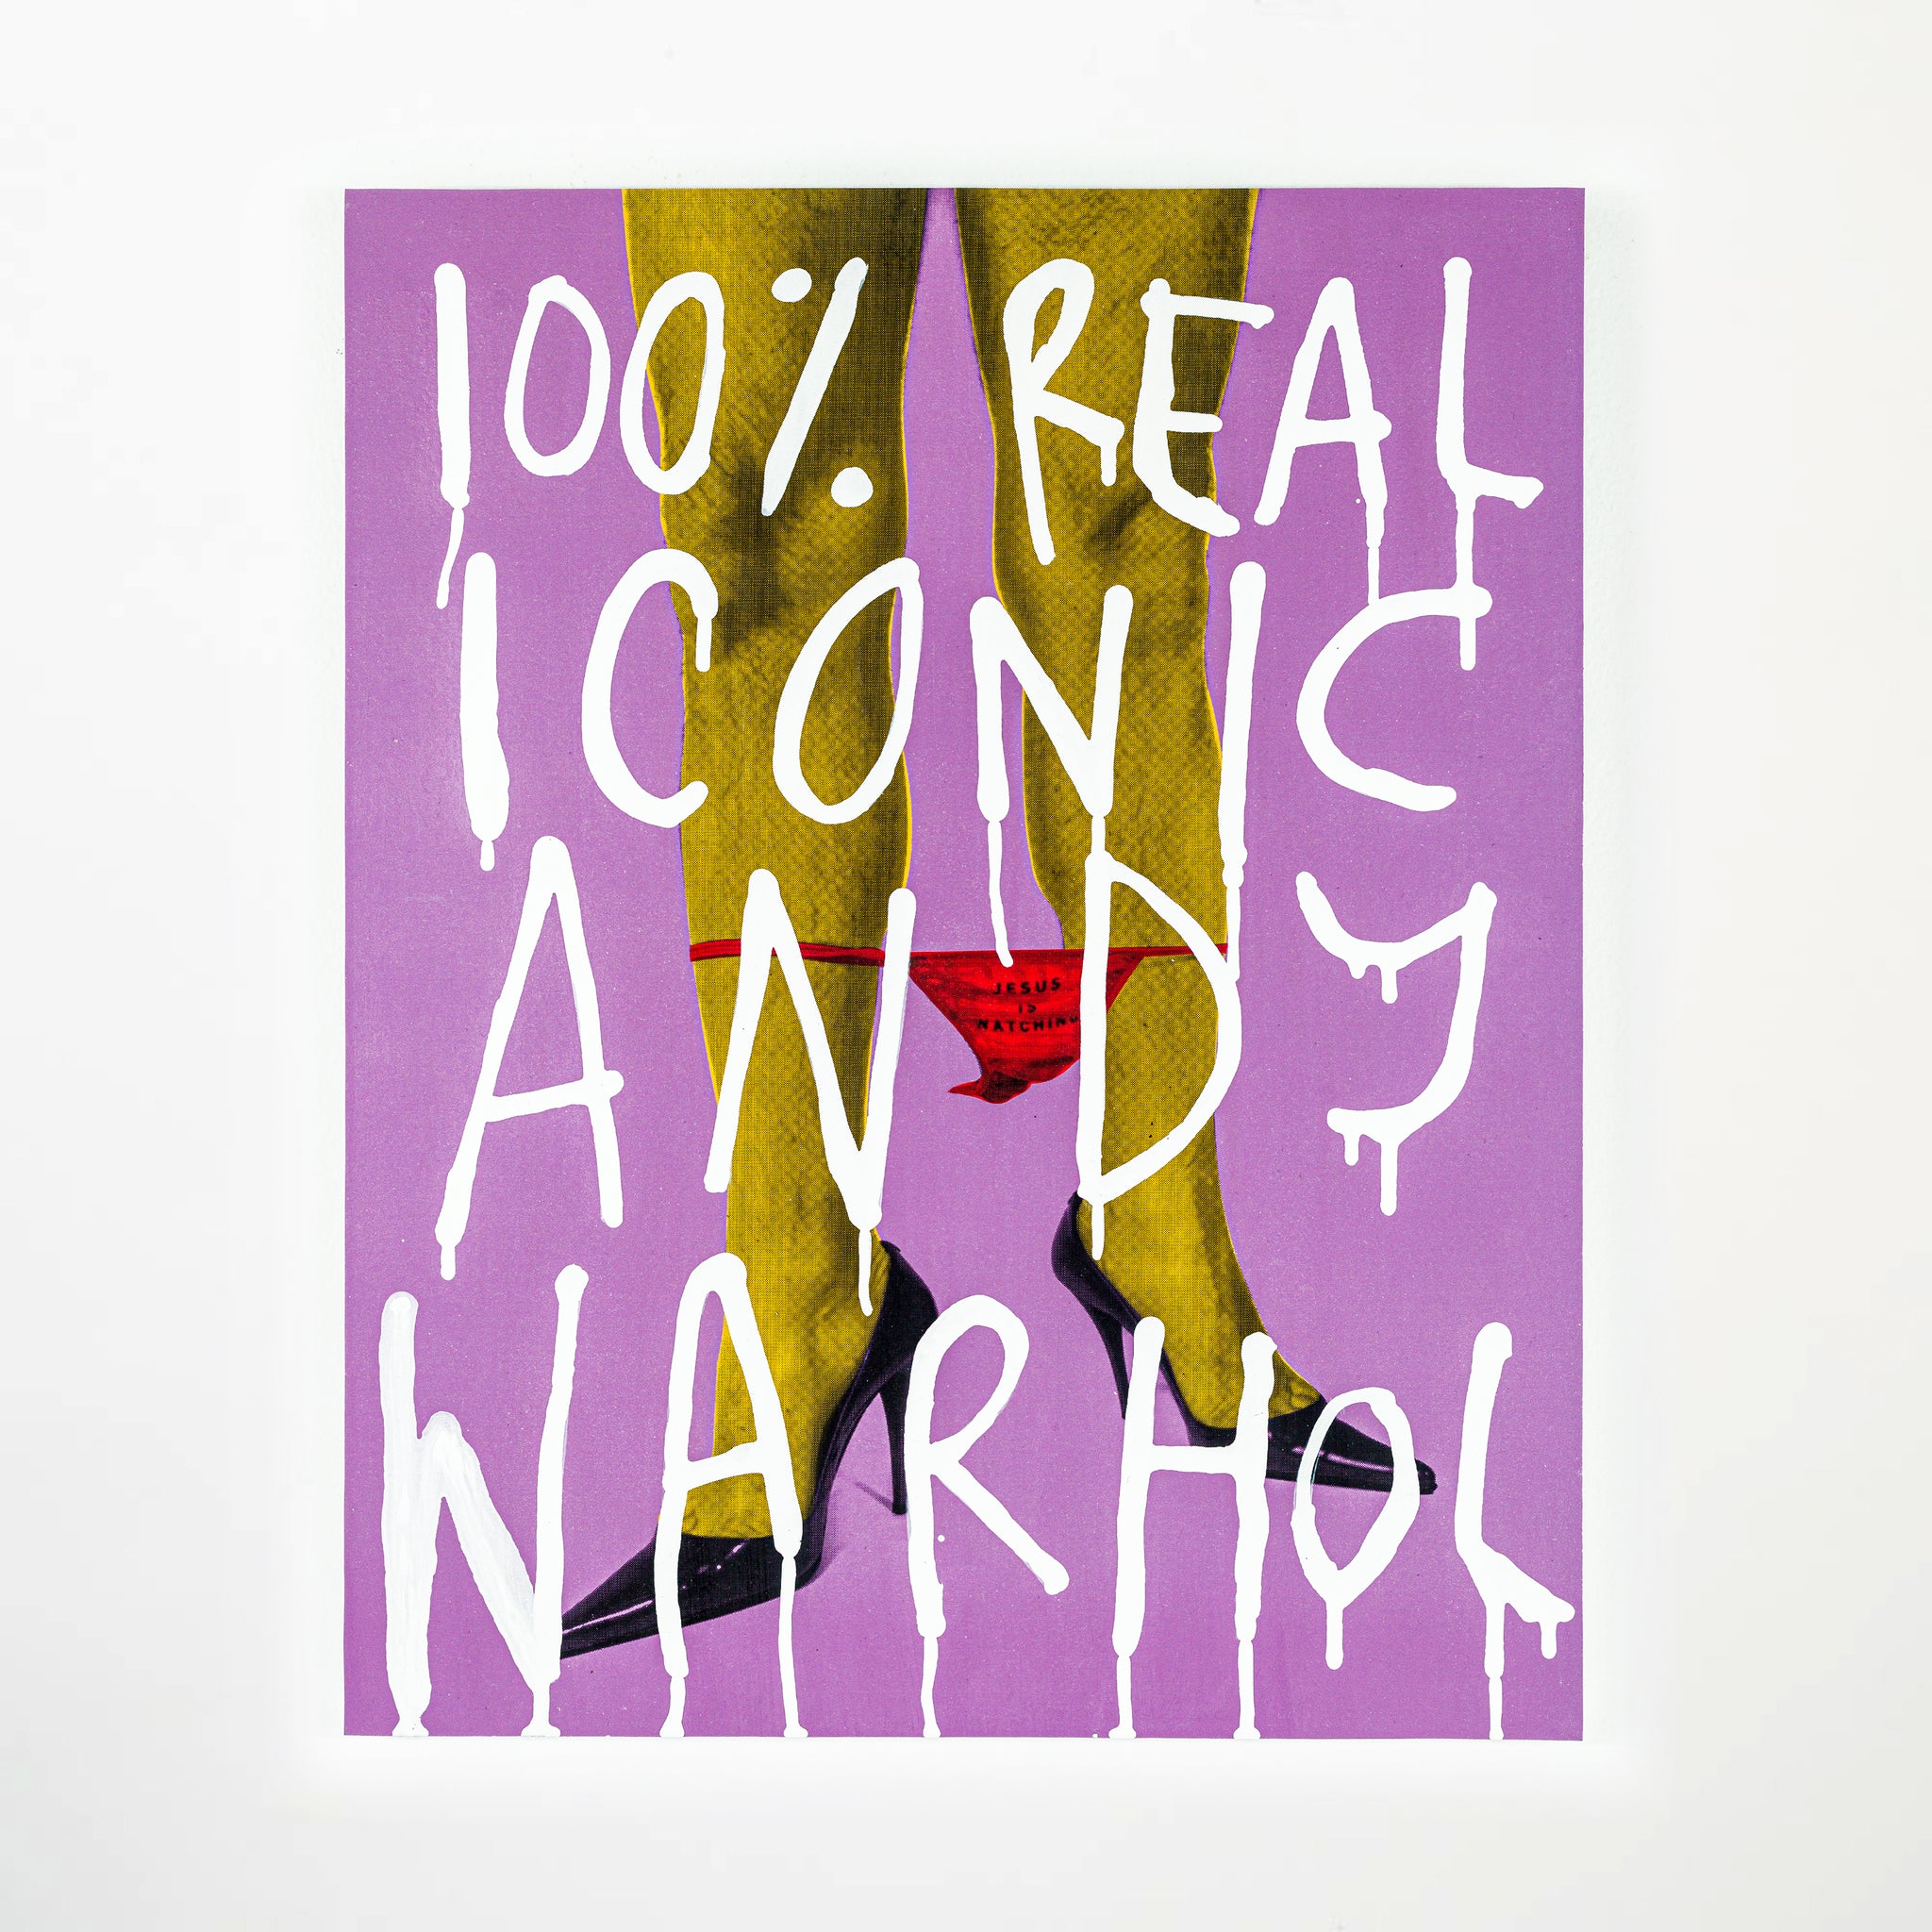 Iconic Warhol